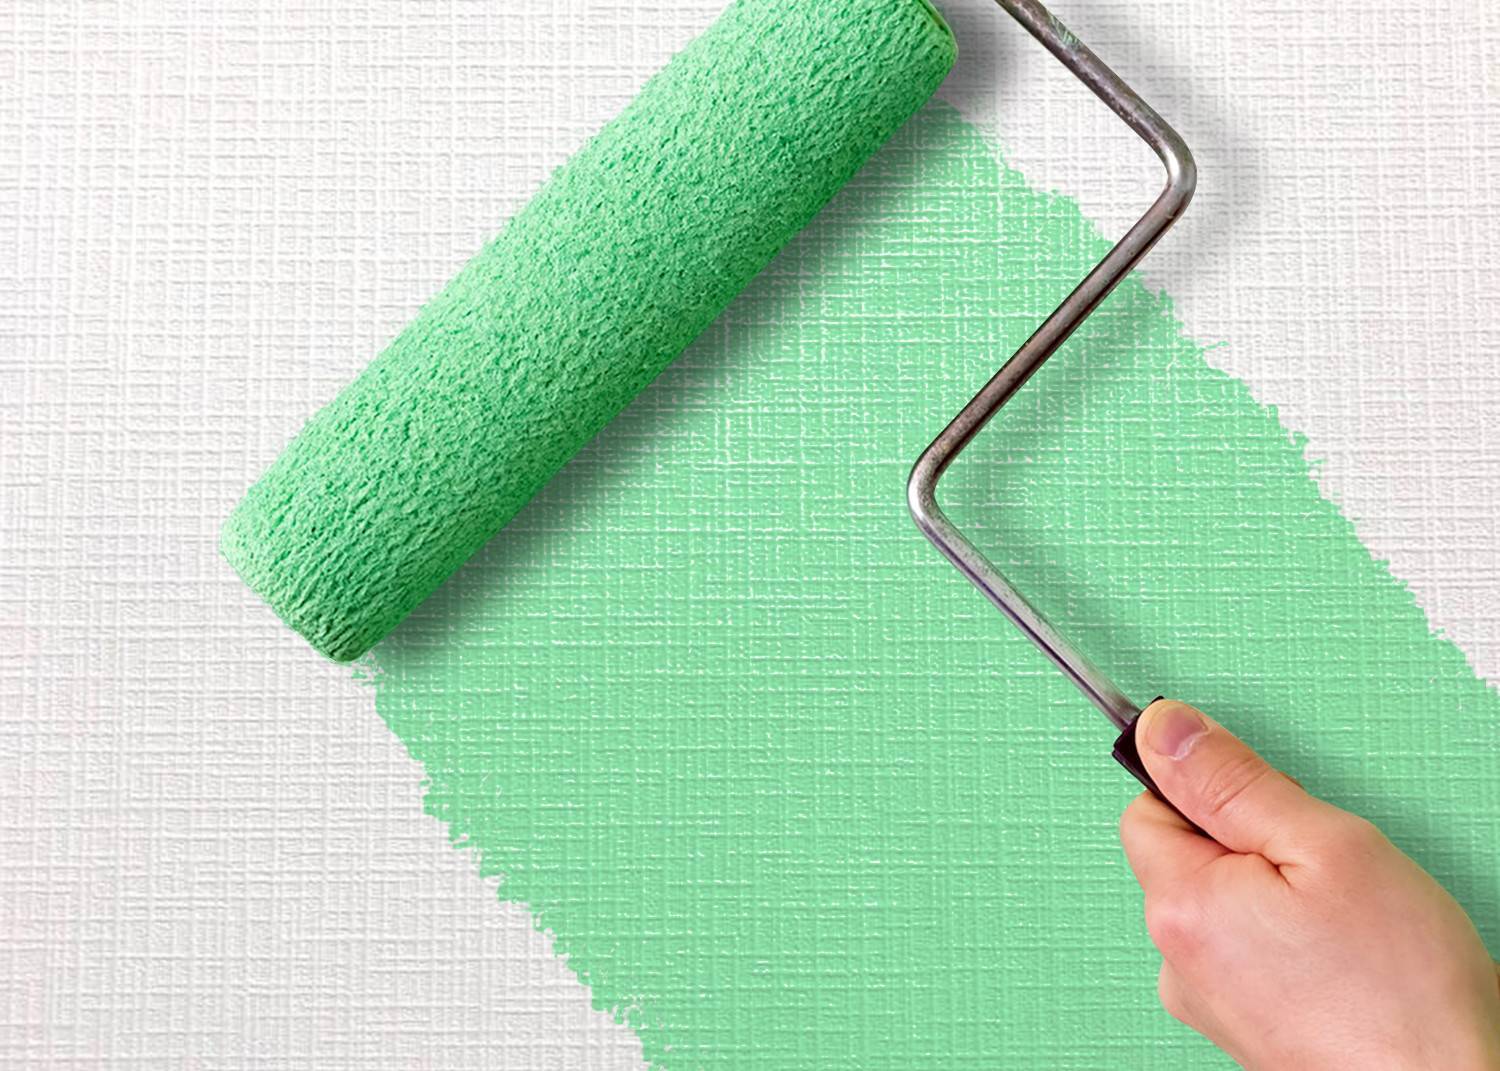 Обои или покраска стен: что практичнее и дешевле?